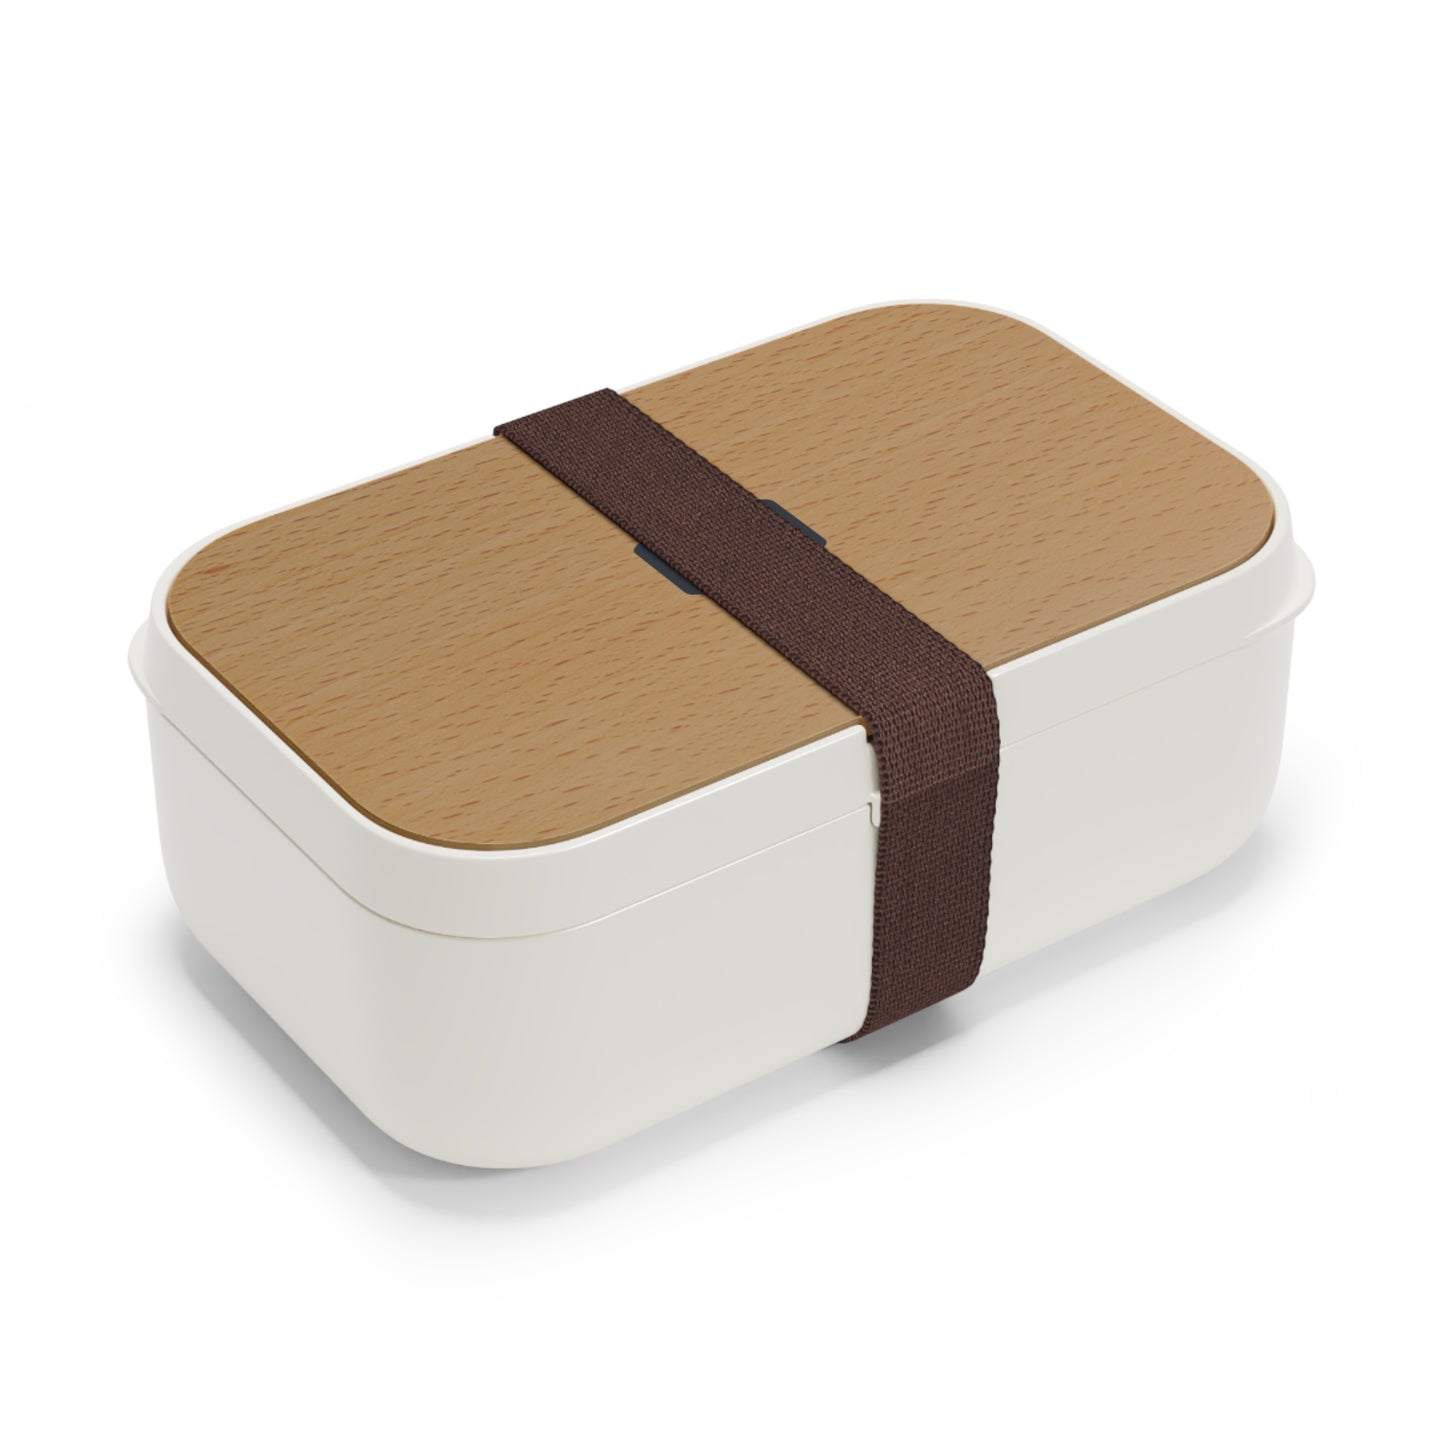 KLYKI Co. Bento Lunch Box - BPA Free